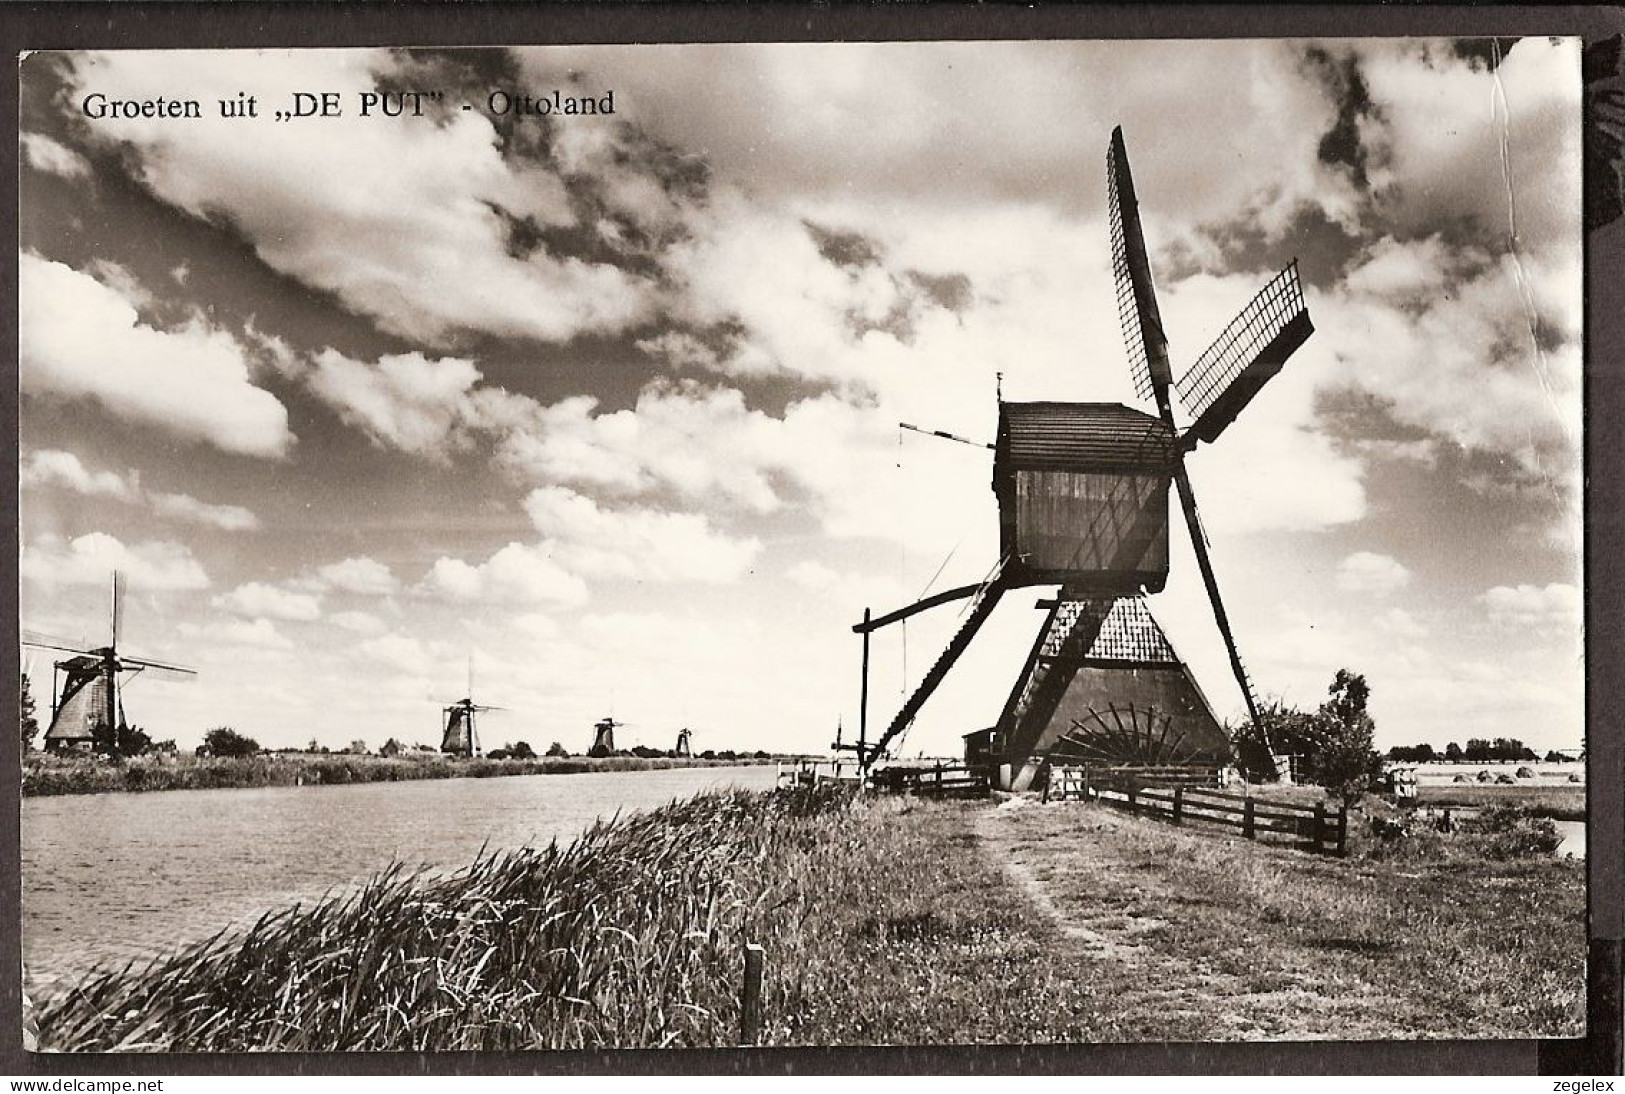 Kinderdijk - 'De Put - Ottoland' - Hollandse Molen - Windmill, Mühle, Moulin à Vent - Kinderdijk